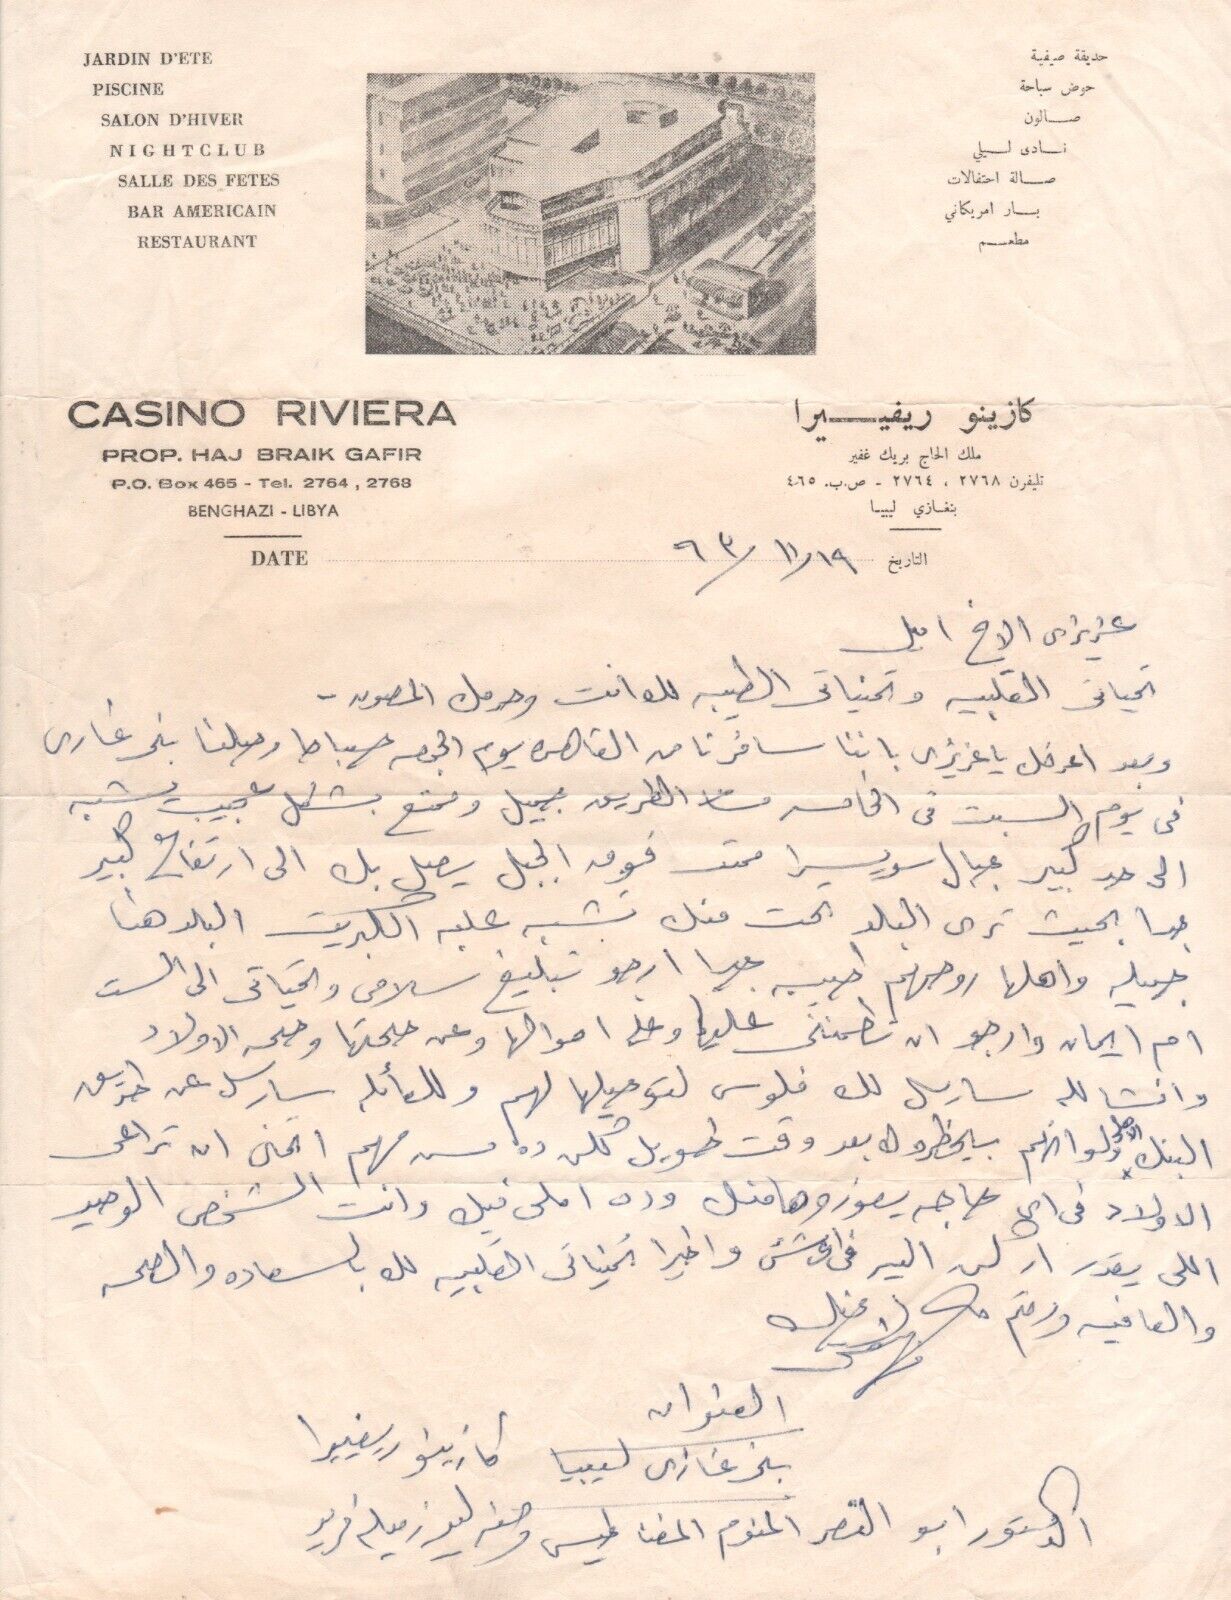 LIBYA - BENGHAZI  1963  LETTER FROM  CASINO RIVIERA